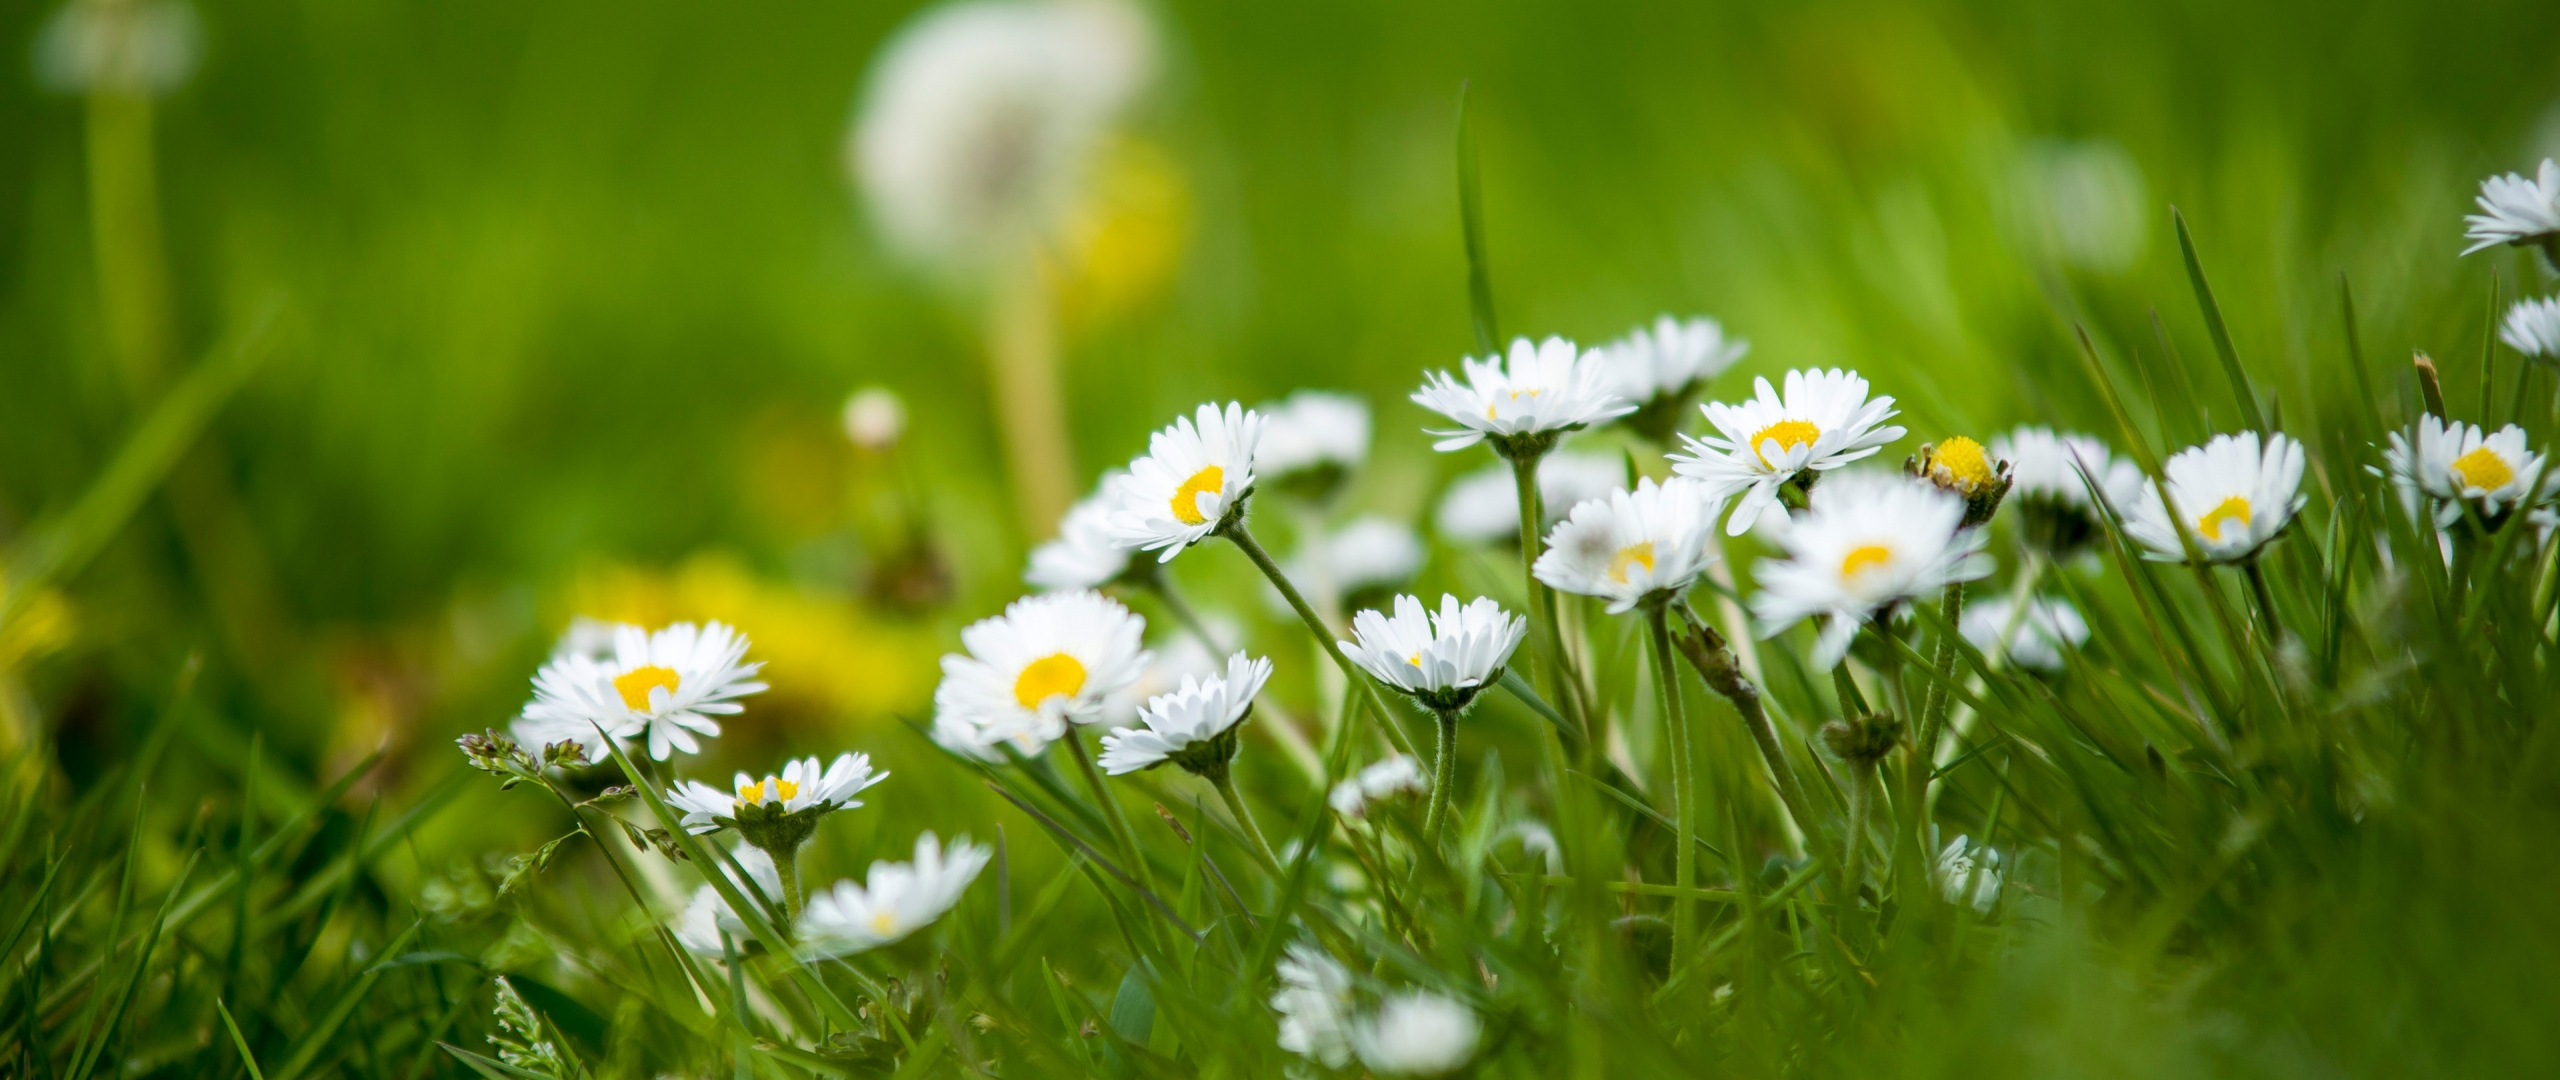 Meadow, small white daisy, green grass, 2560x1080 wallpaper